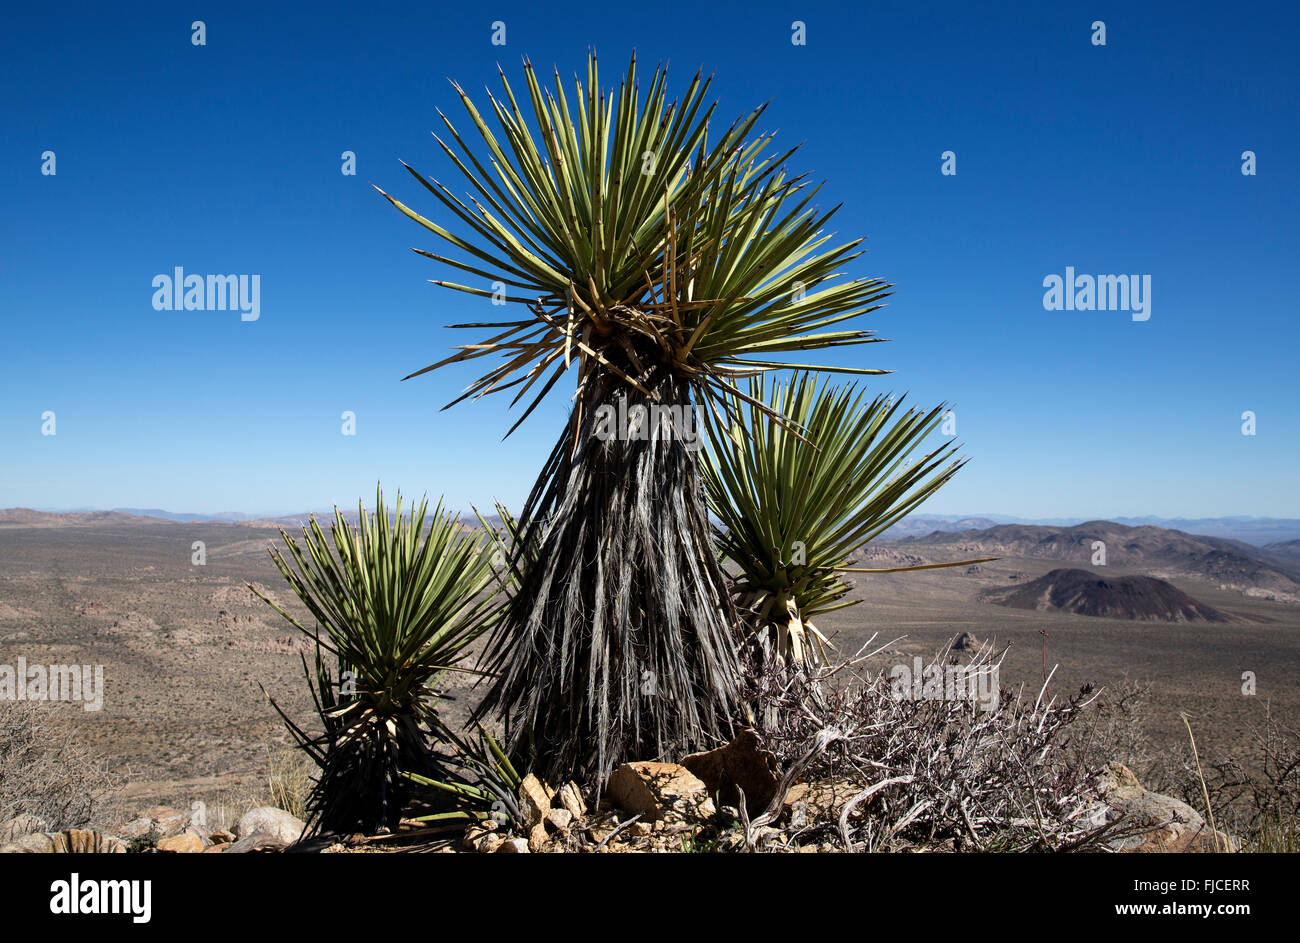 Yucca Plant Joshua Tree National Park California Usa Stock Photo Alamy